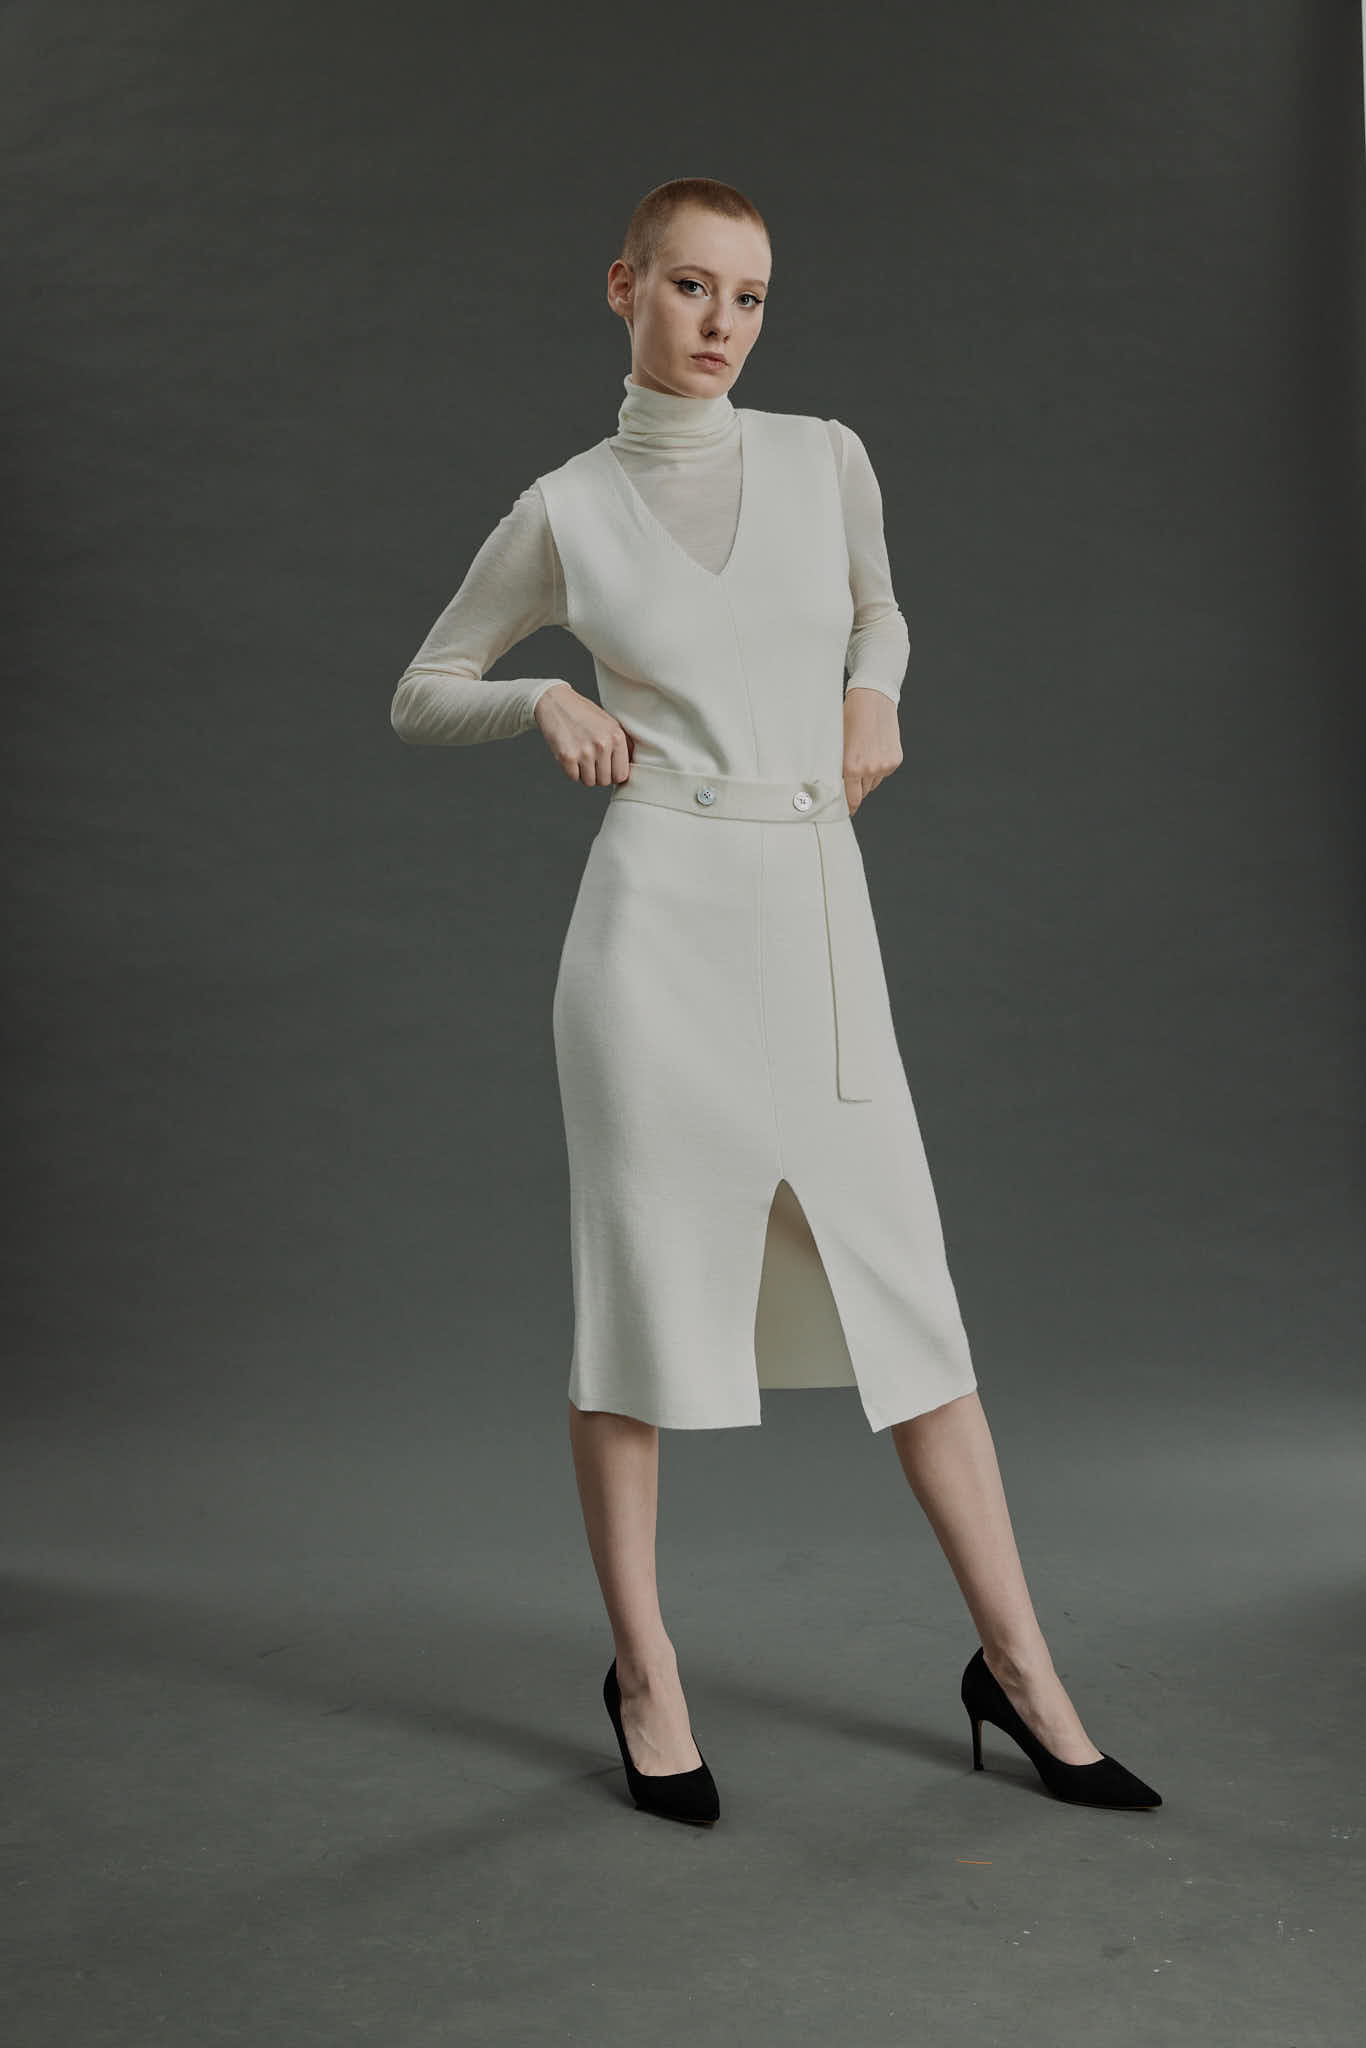 Porto Knit Dress – Knit V-neck dress in black white